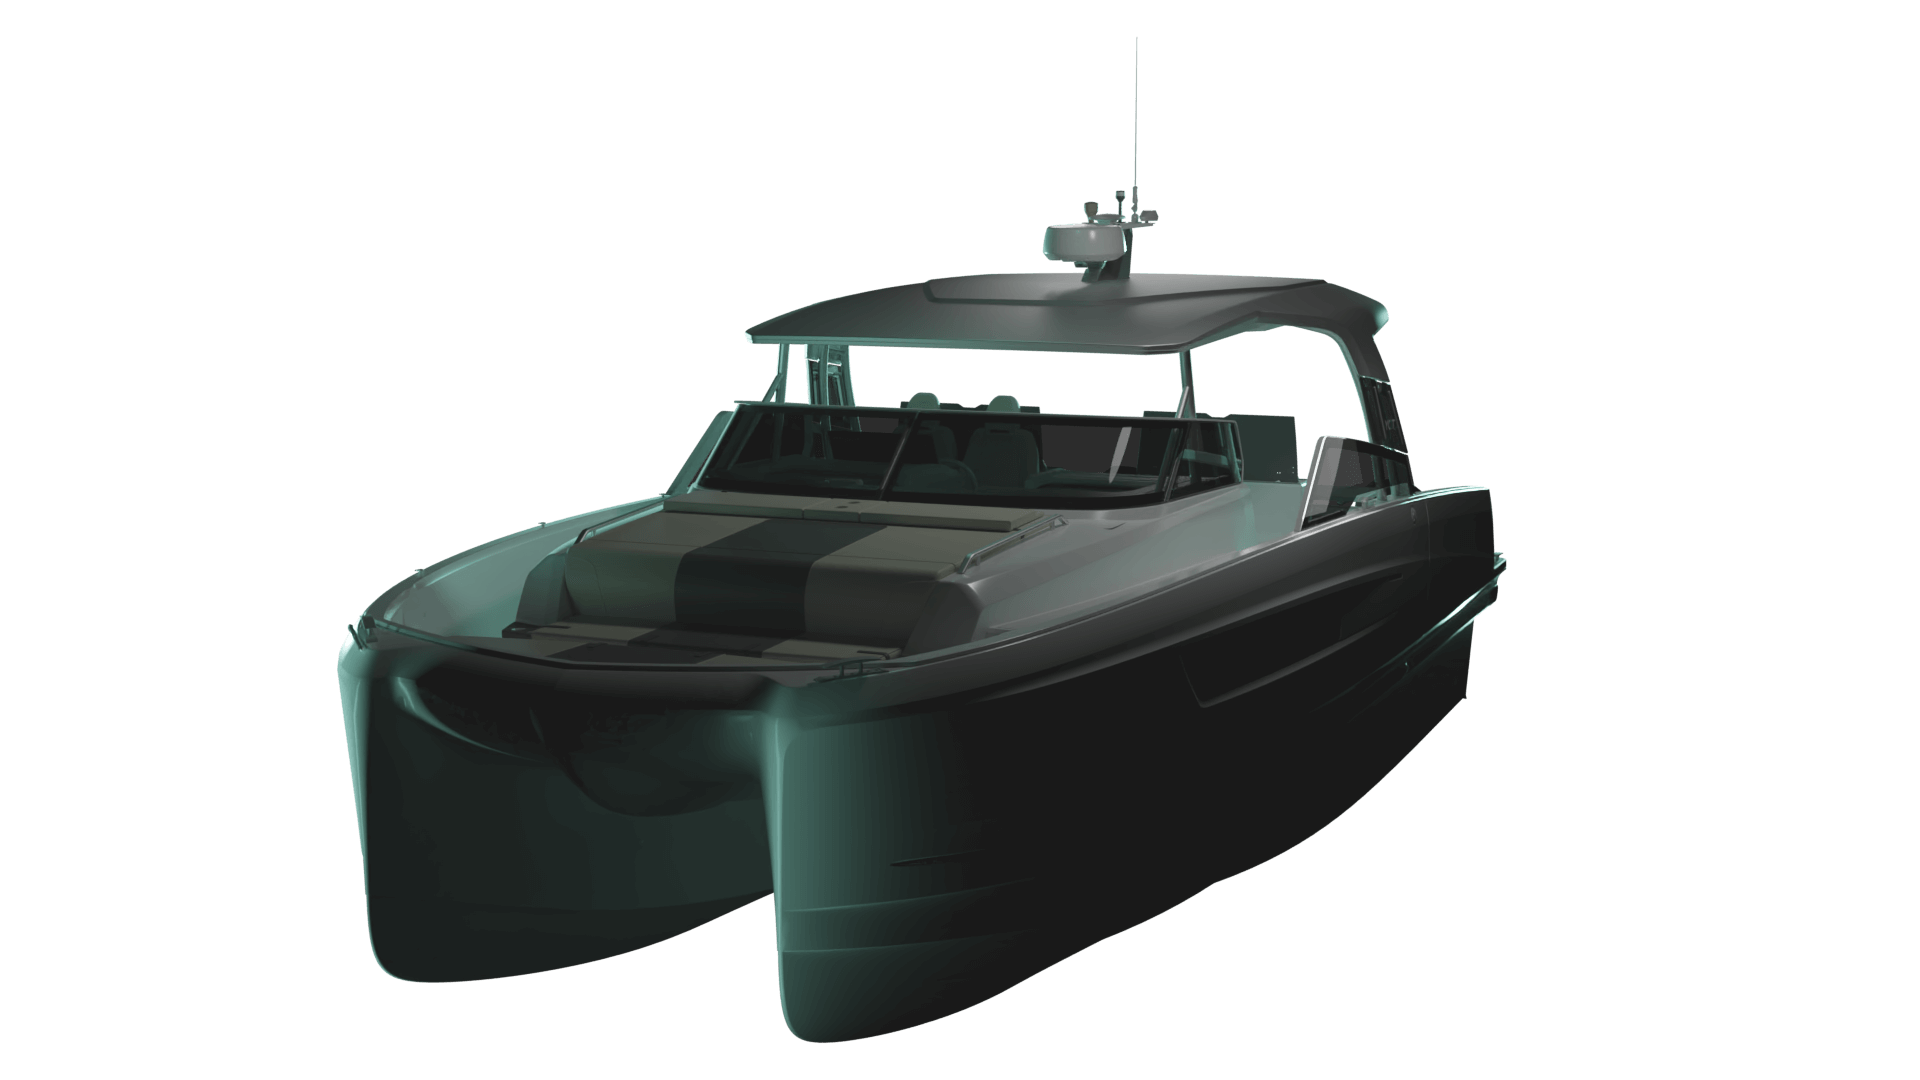 CATANA Group Unveils YOT, the Fresh Power Catamaran Sensation on the Seas